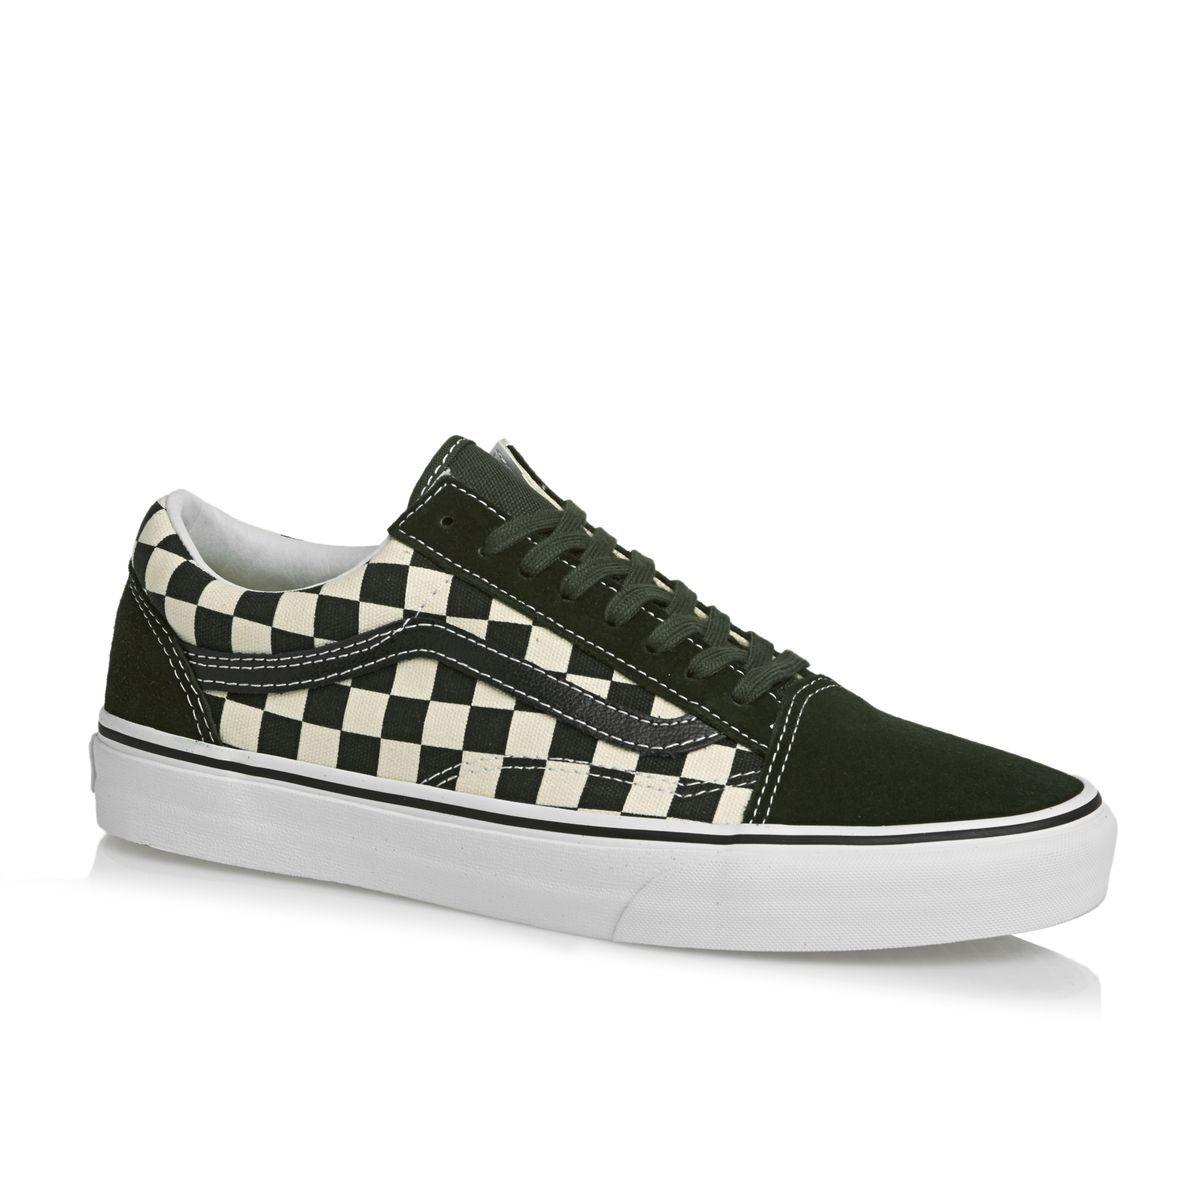 Checkered Vans Skateboard Logo - Vans Skate Shoes - Vans Old Skool Shoes - Checkerboard/Black/Rosin